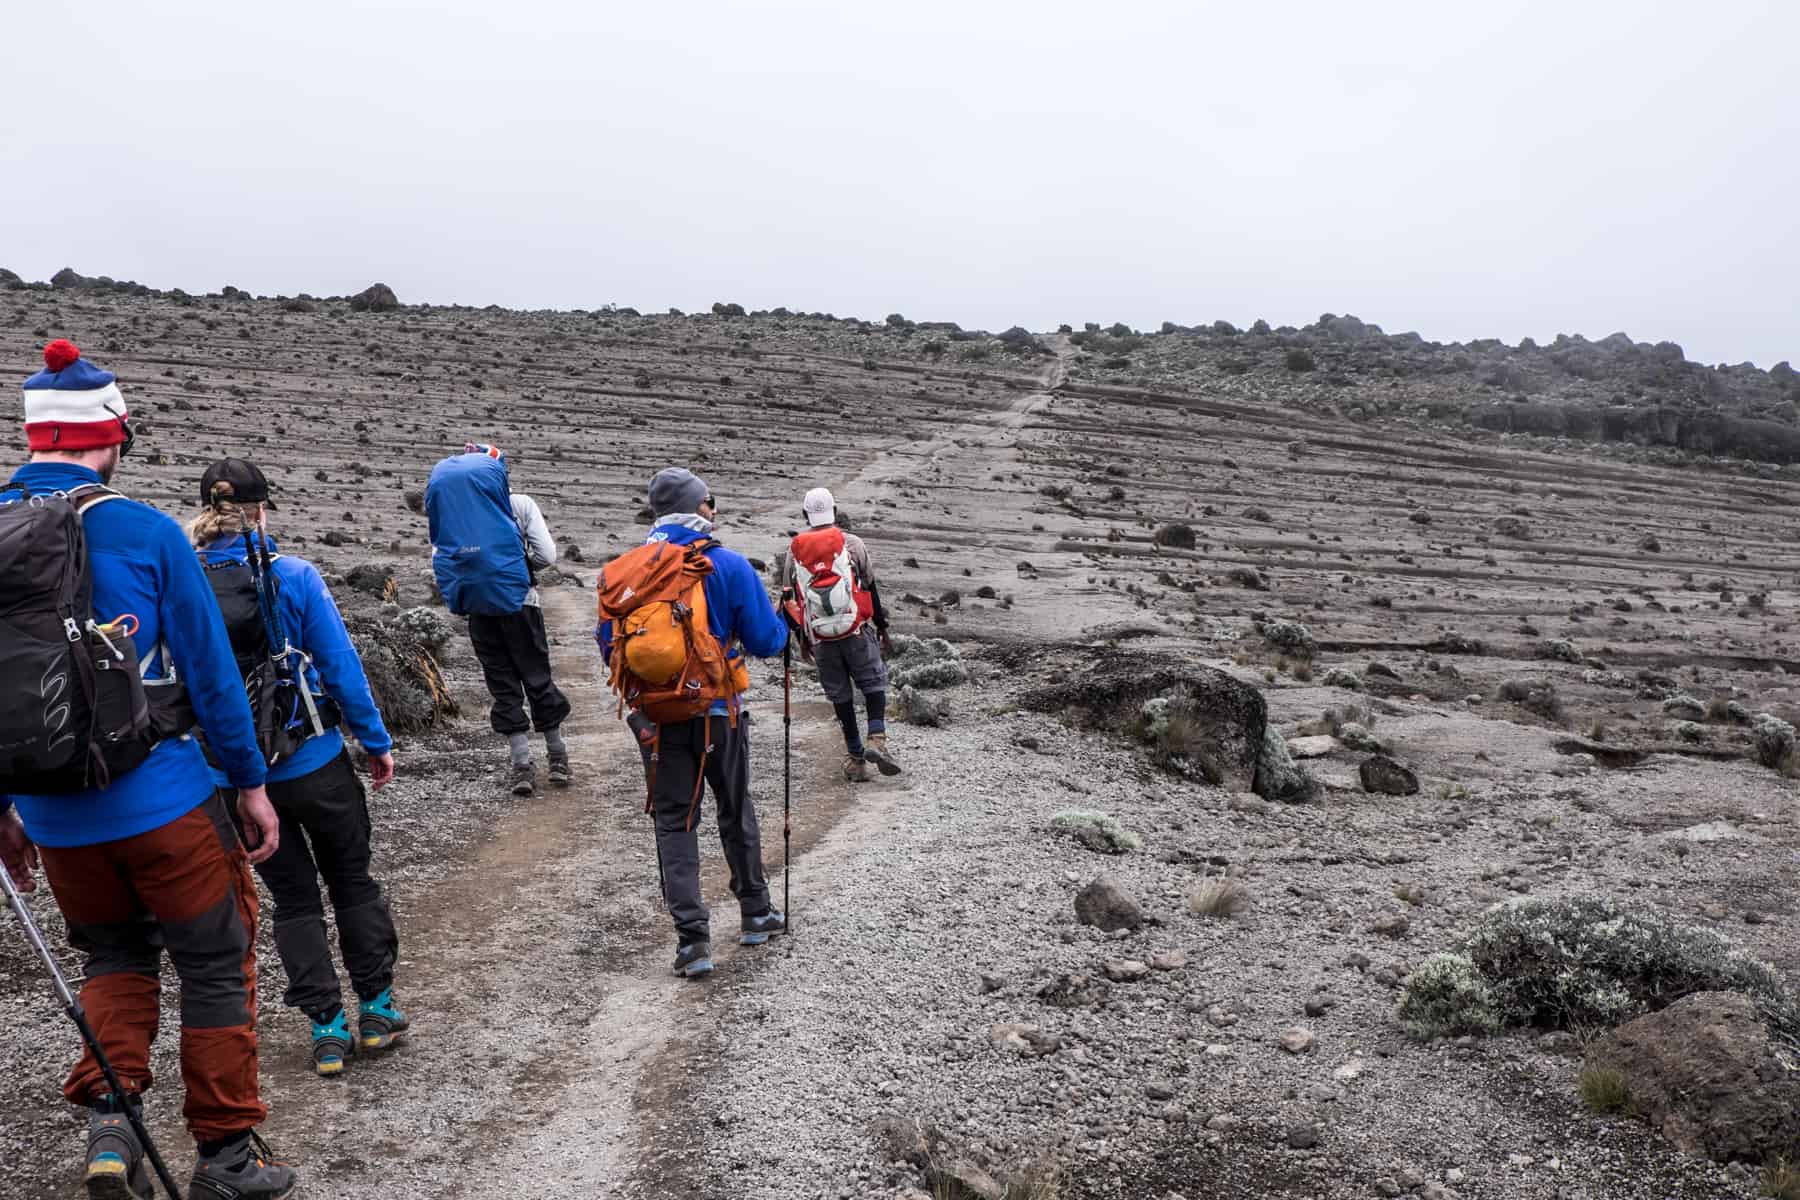 Five people hiking Kilimanjaro, up a grey barren path with small dark rocks and towards a flat ridge